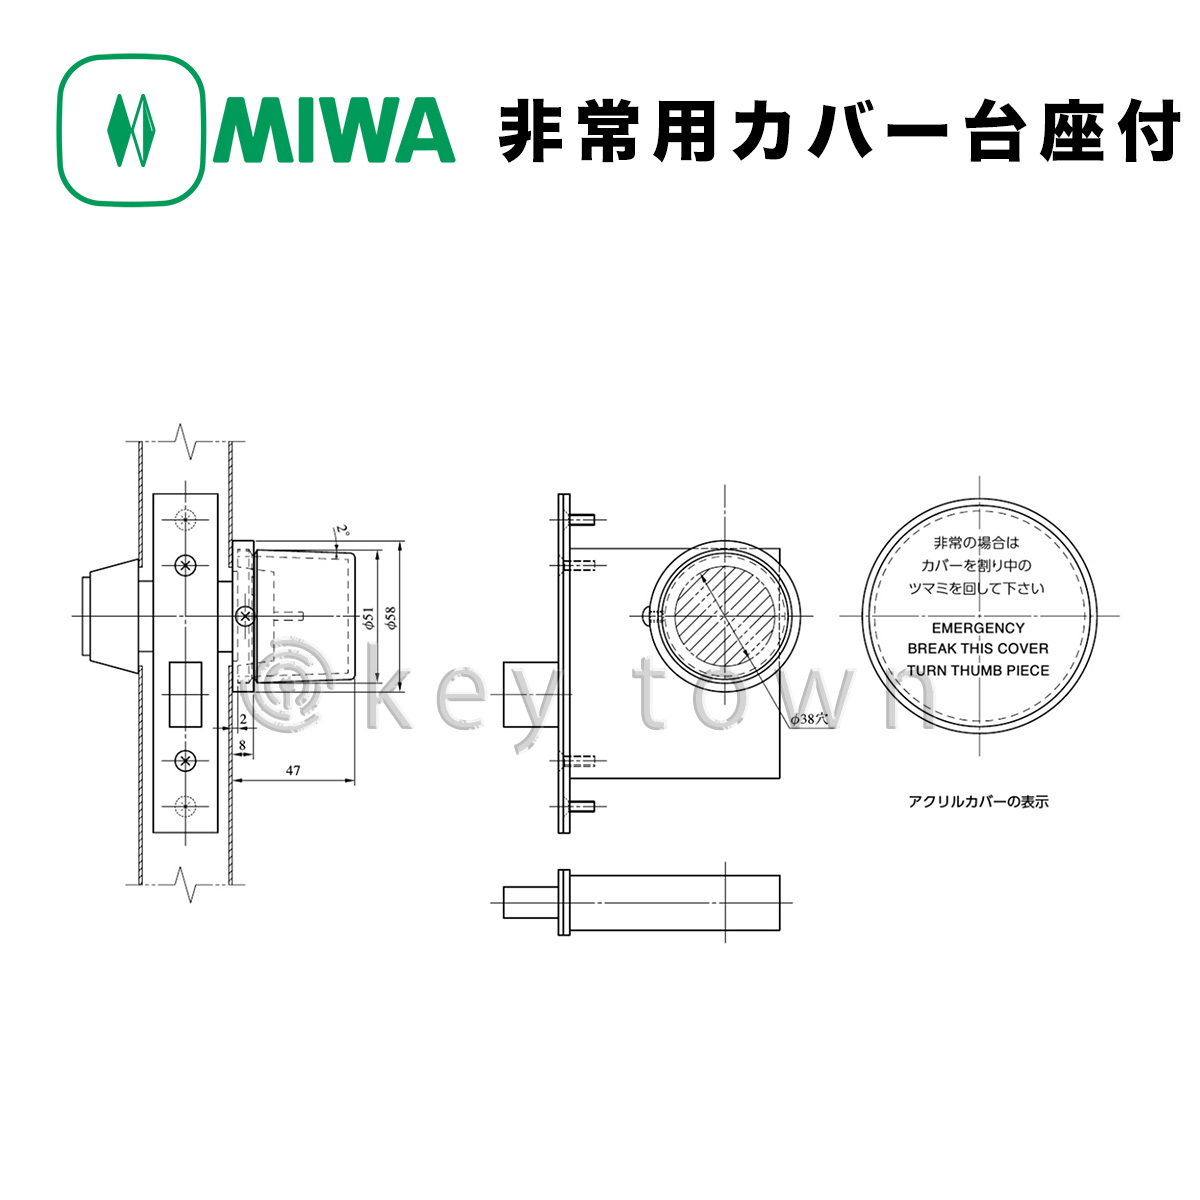 MIWA 【美和ロック】 非常用丸カバー [MIWA-cover2] サムターン用